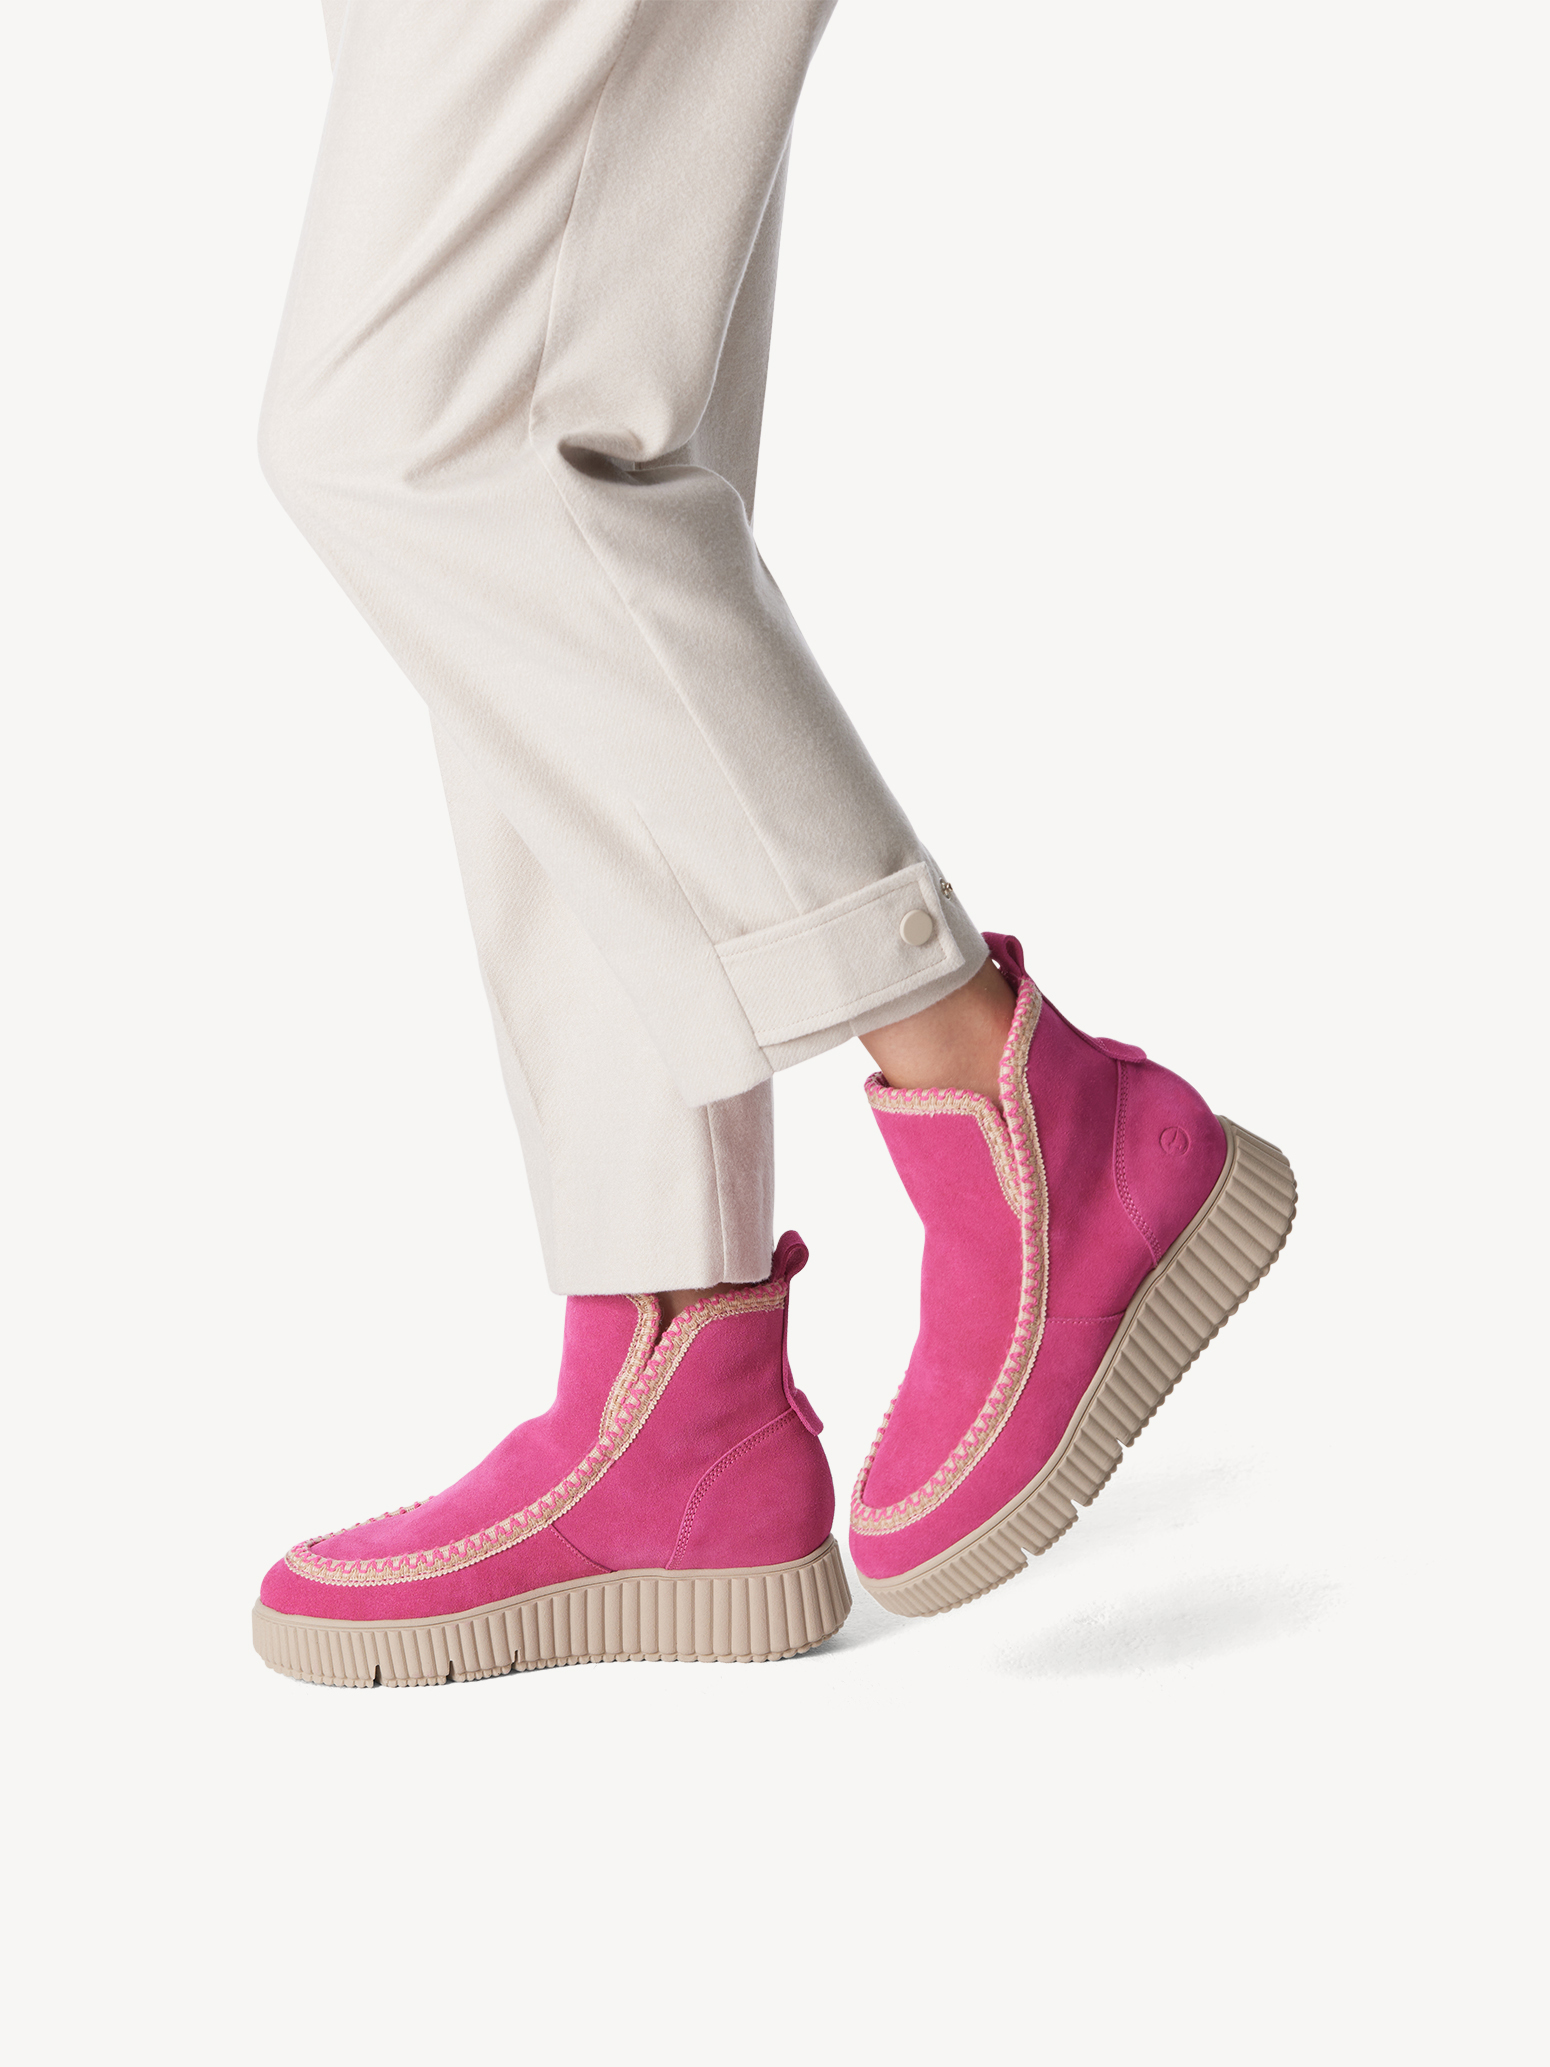 Lederstiefelette - pink Warmfutter 1-26865-41-513: Stiefeletten online kaufen! & Tamaris Boots